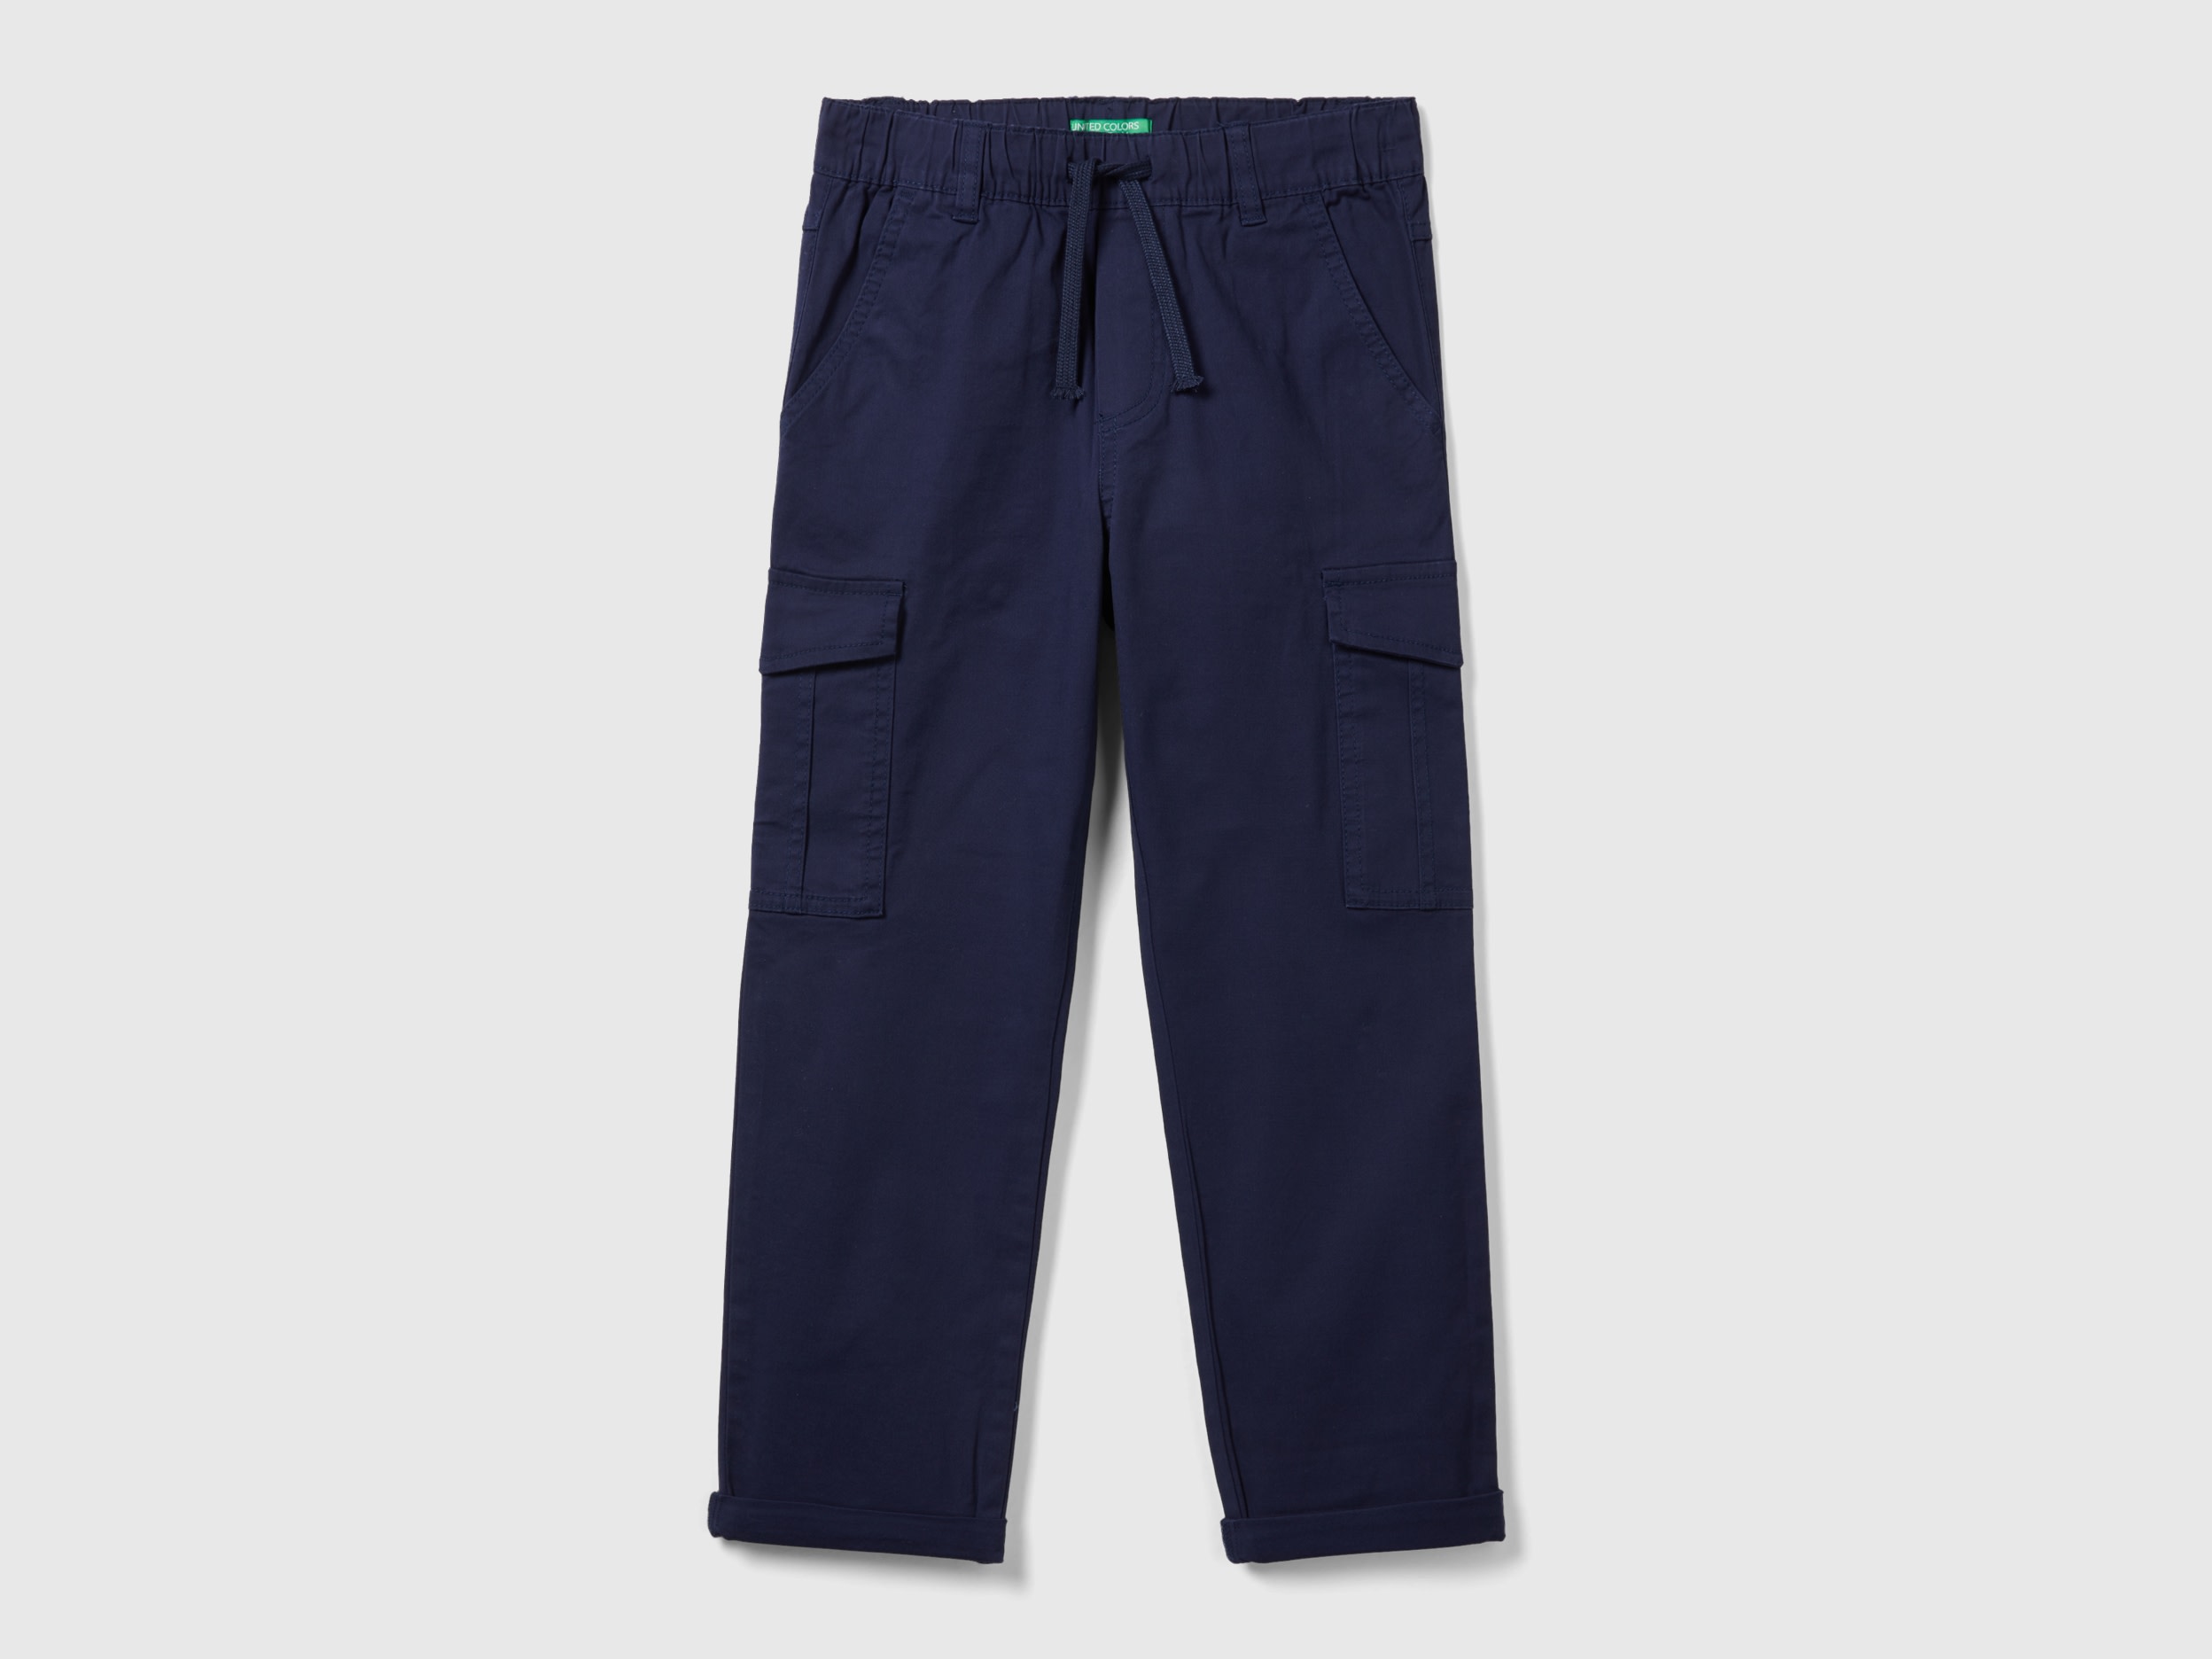 Benetton, Straight Leg Cargo Trousers, size 3XL, Dark Blue, Kids